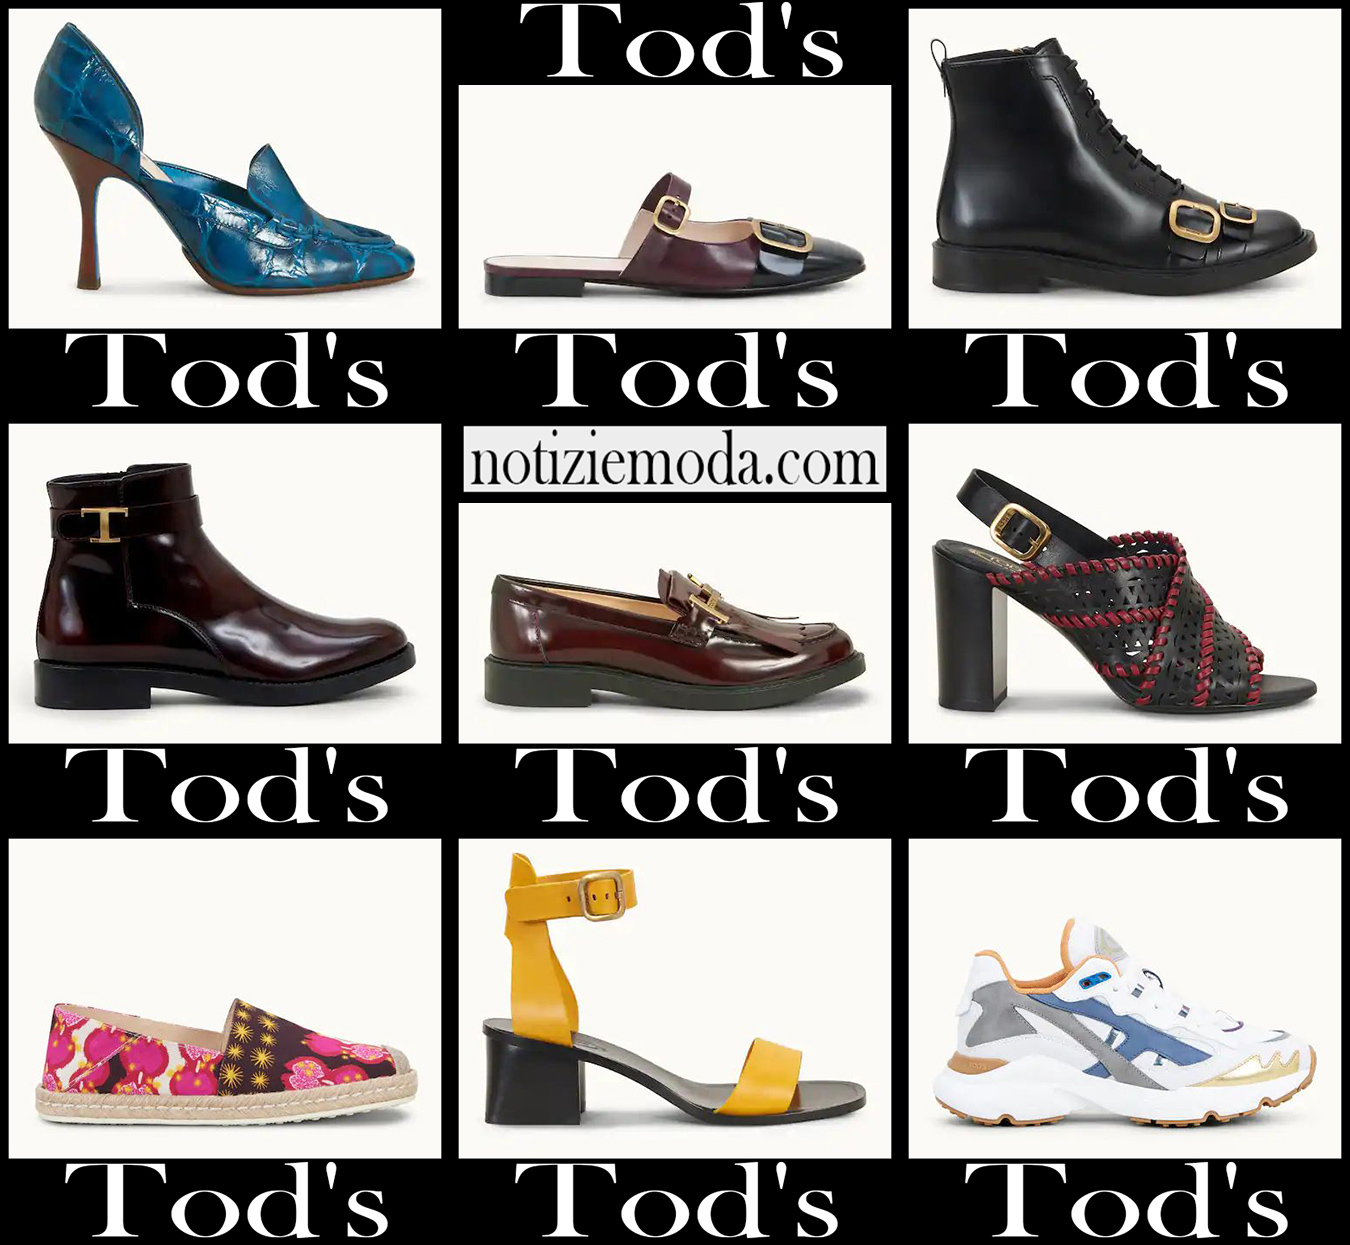 Nuovi arrivi scarpe Tods 2021 calzature moda donna